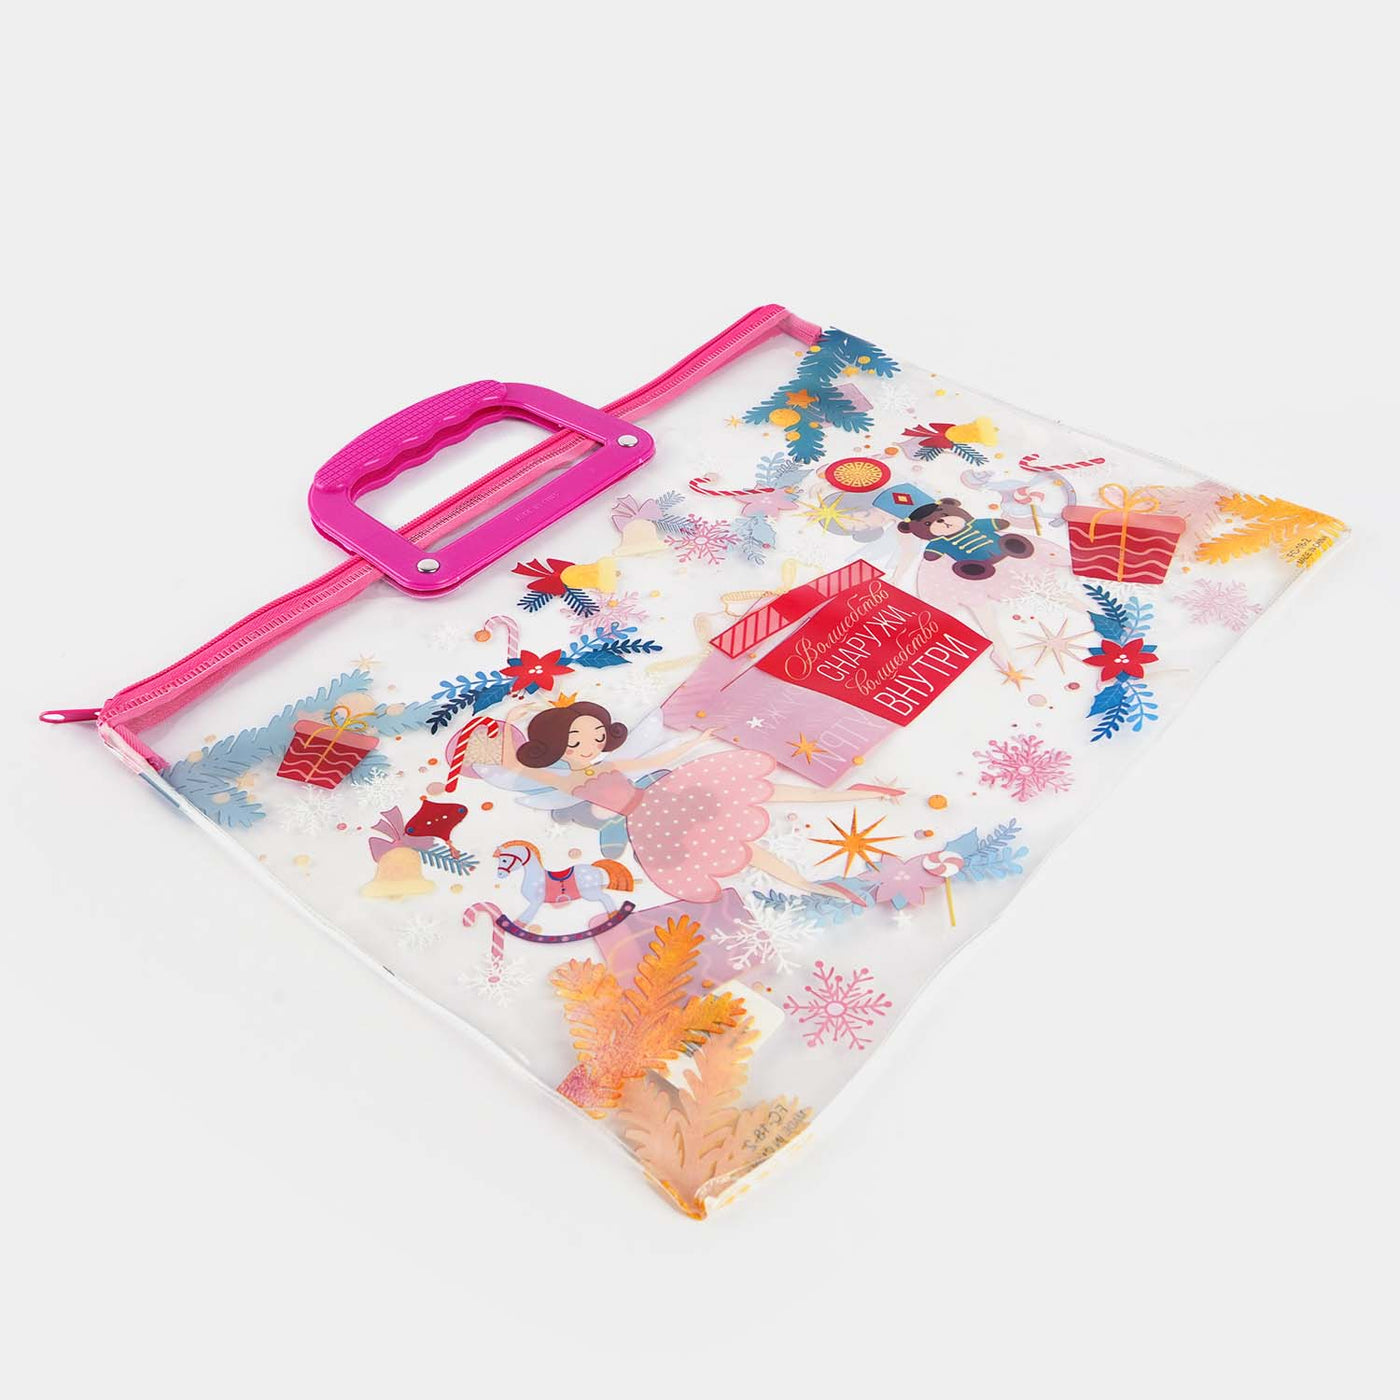 Cute & Stylish Transparent Bag For Kids